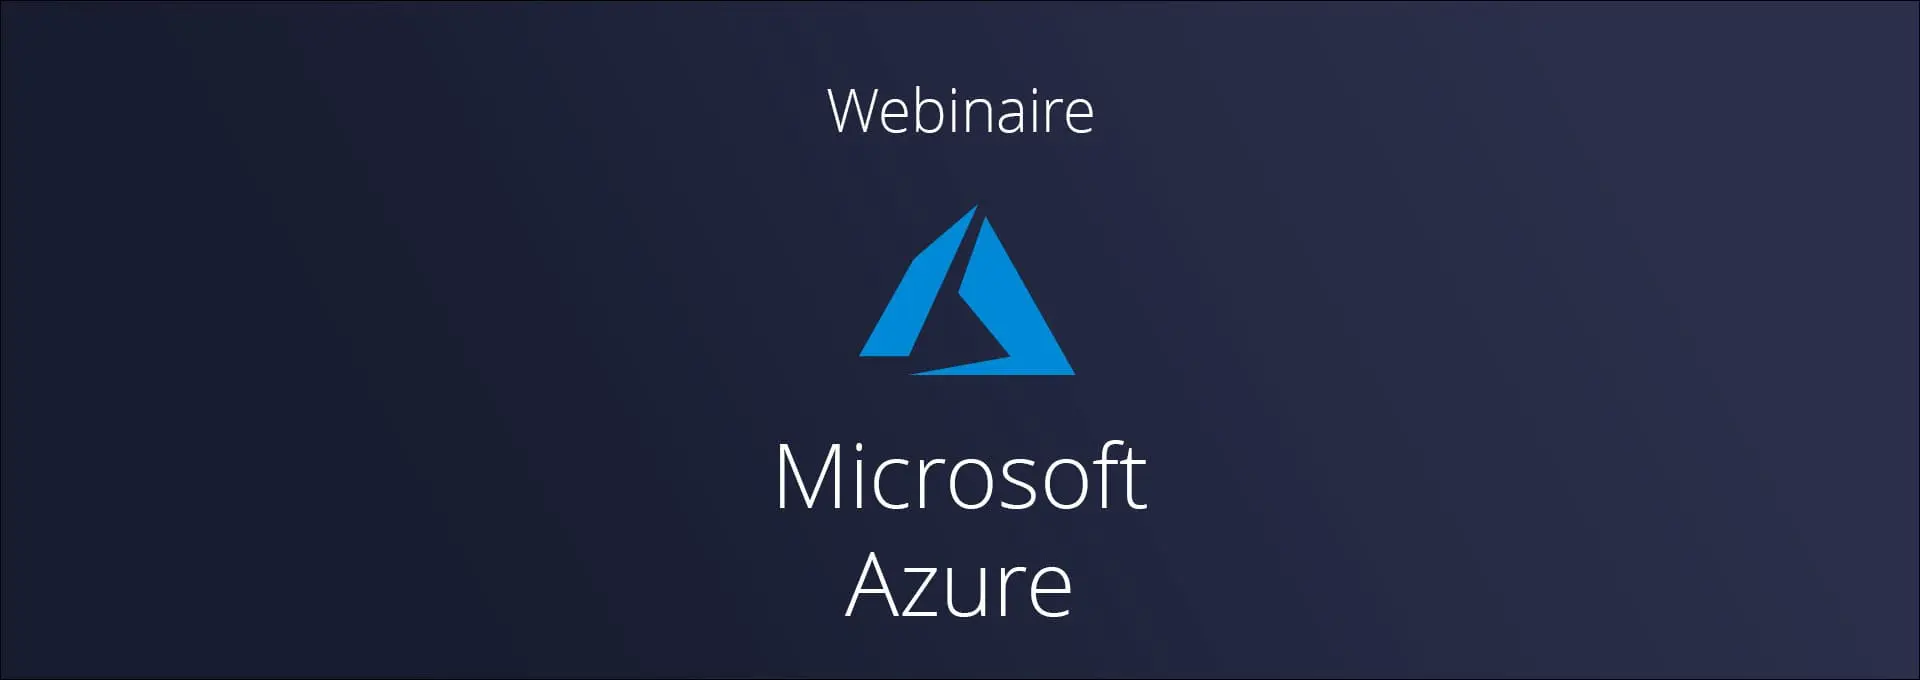 Actualités Webinaires - Microsoft Azure